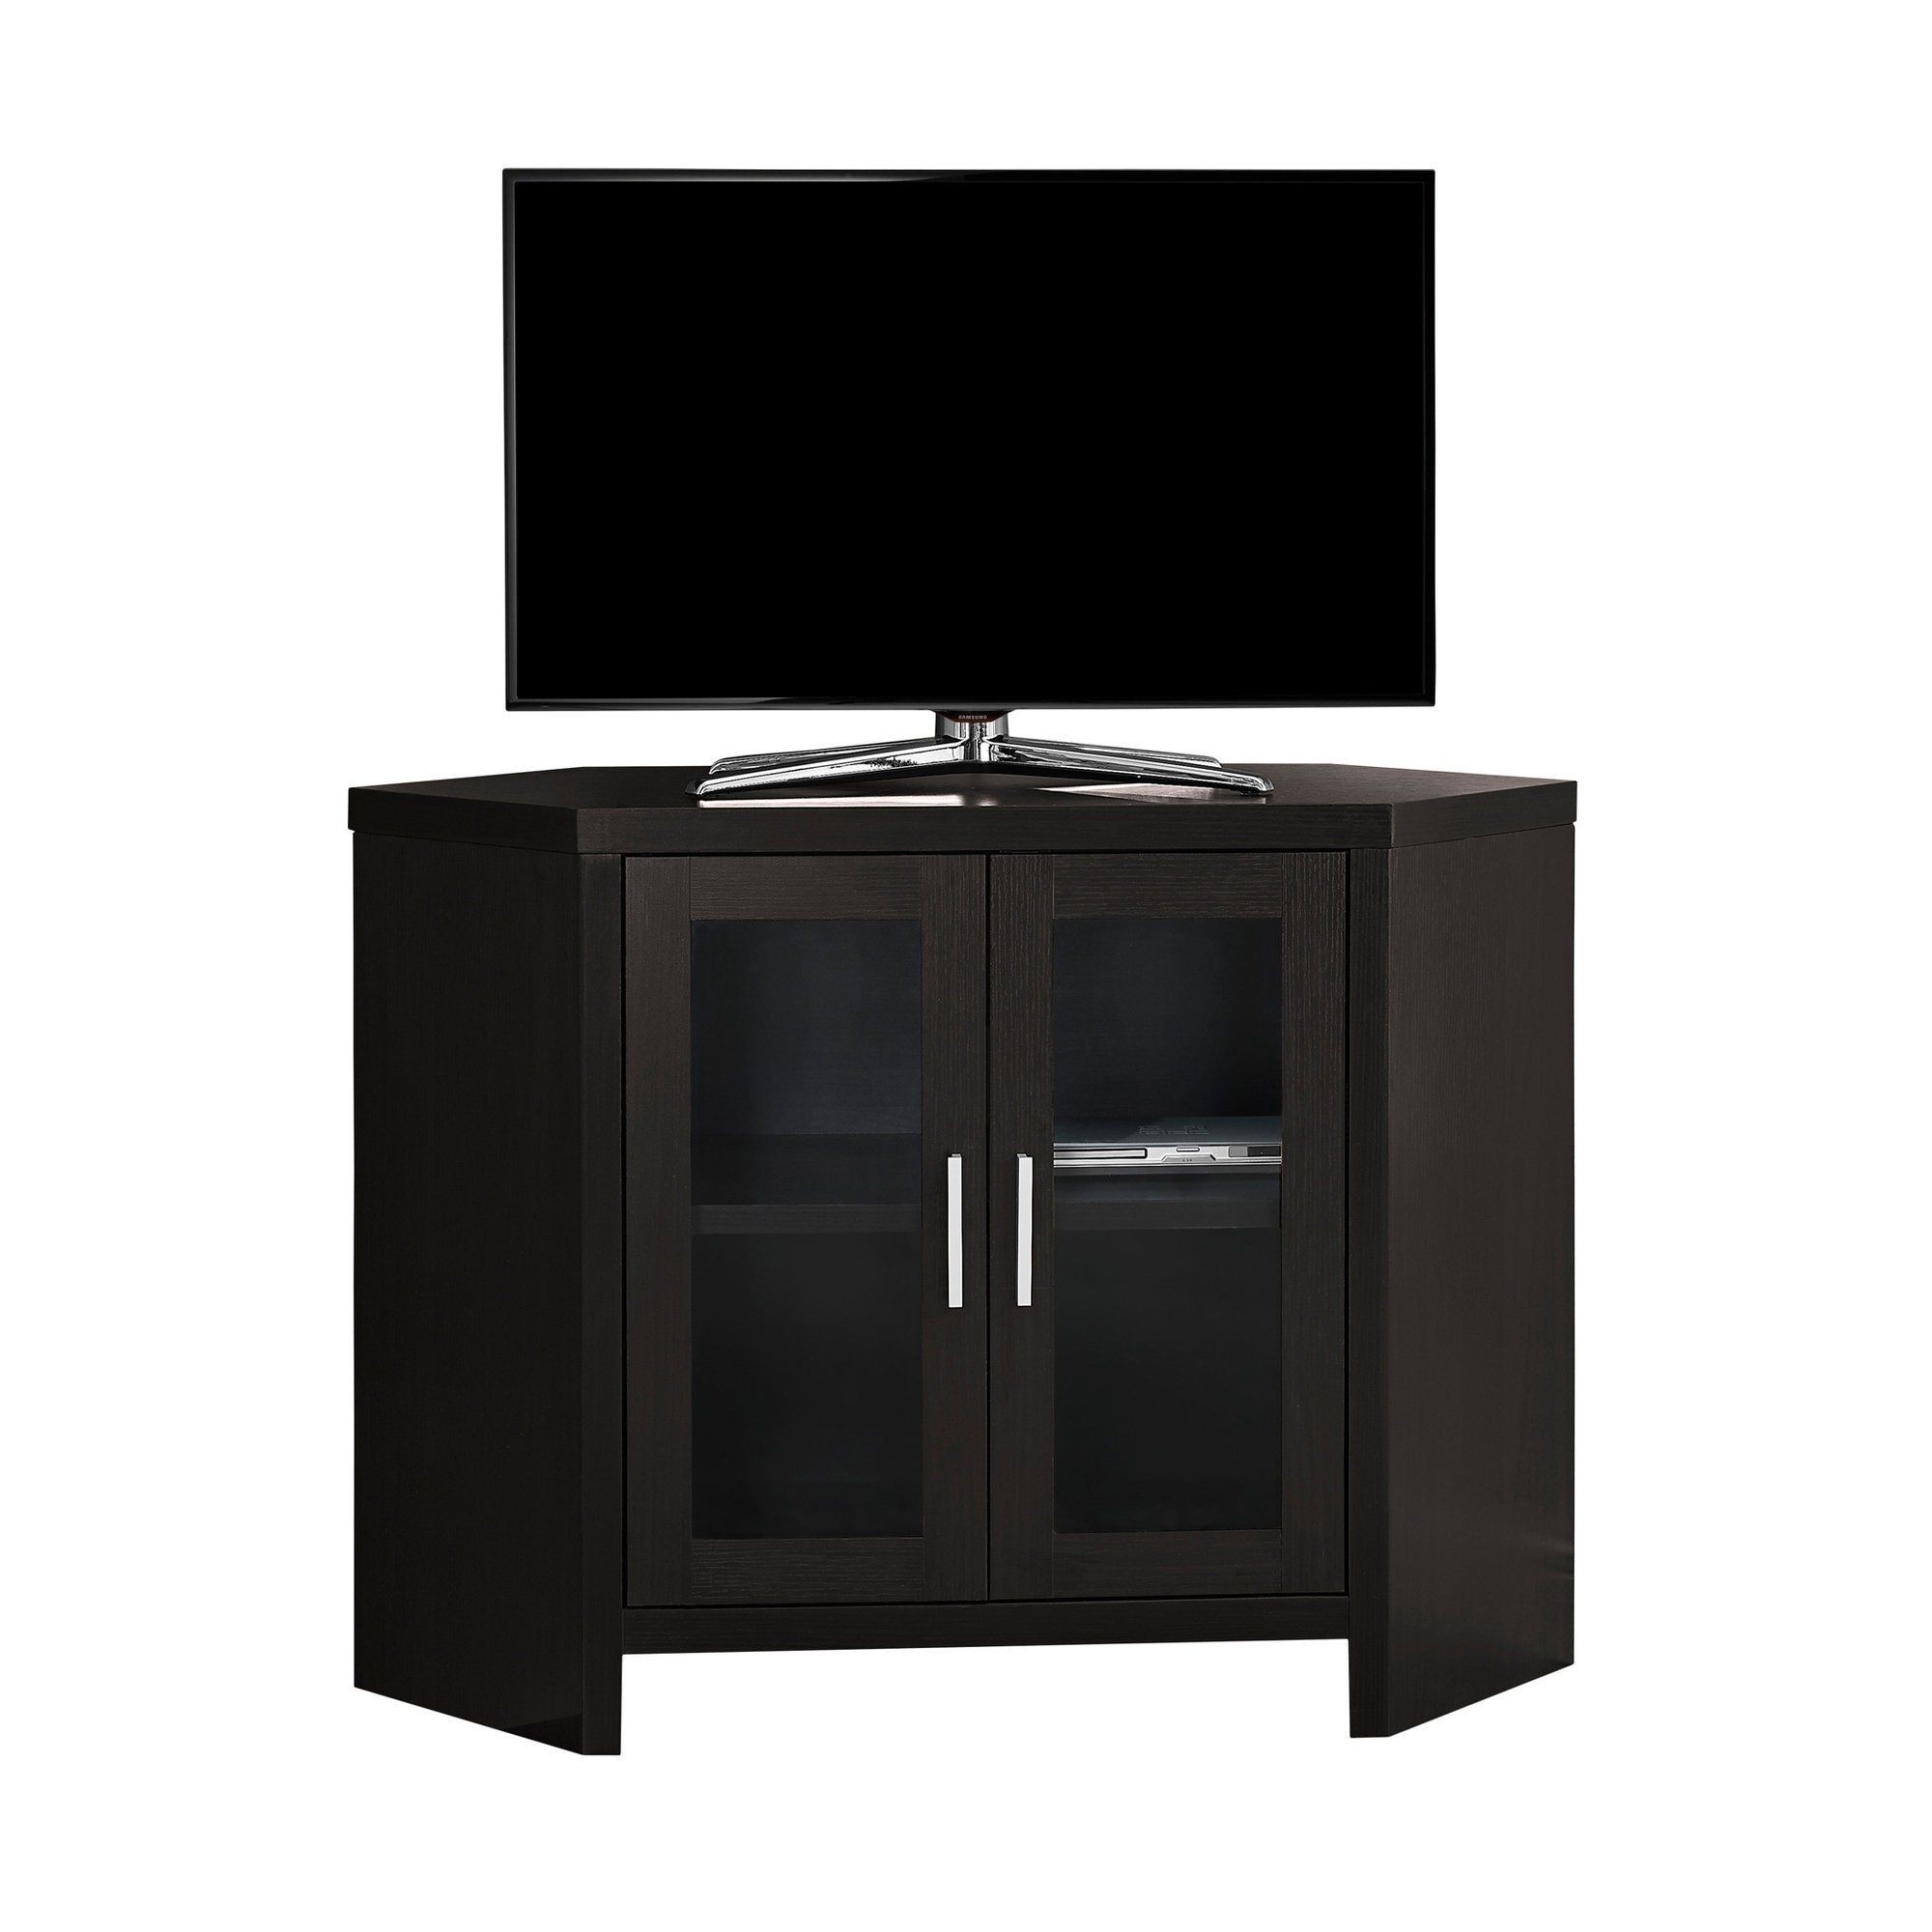 42” Wood Corner TV Stand